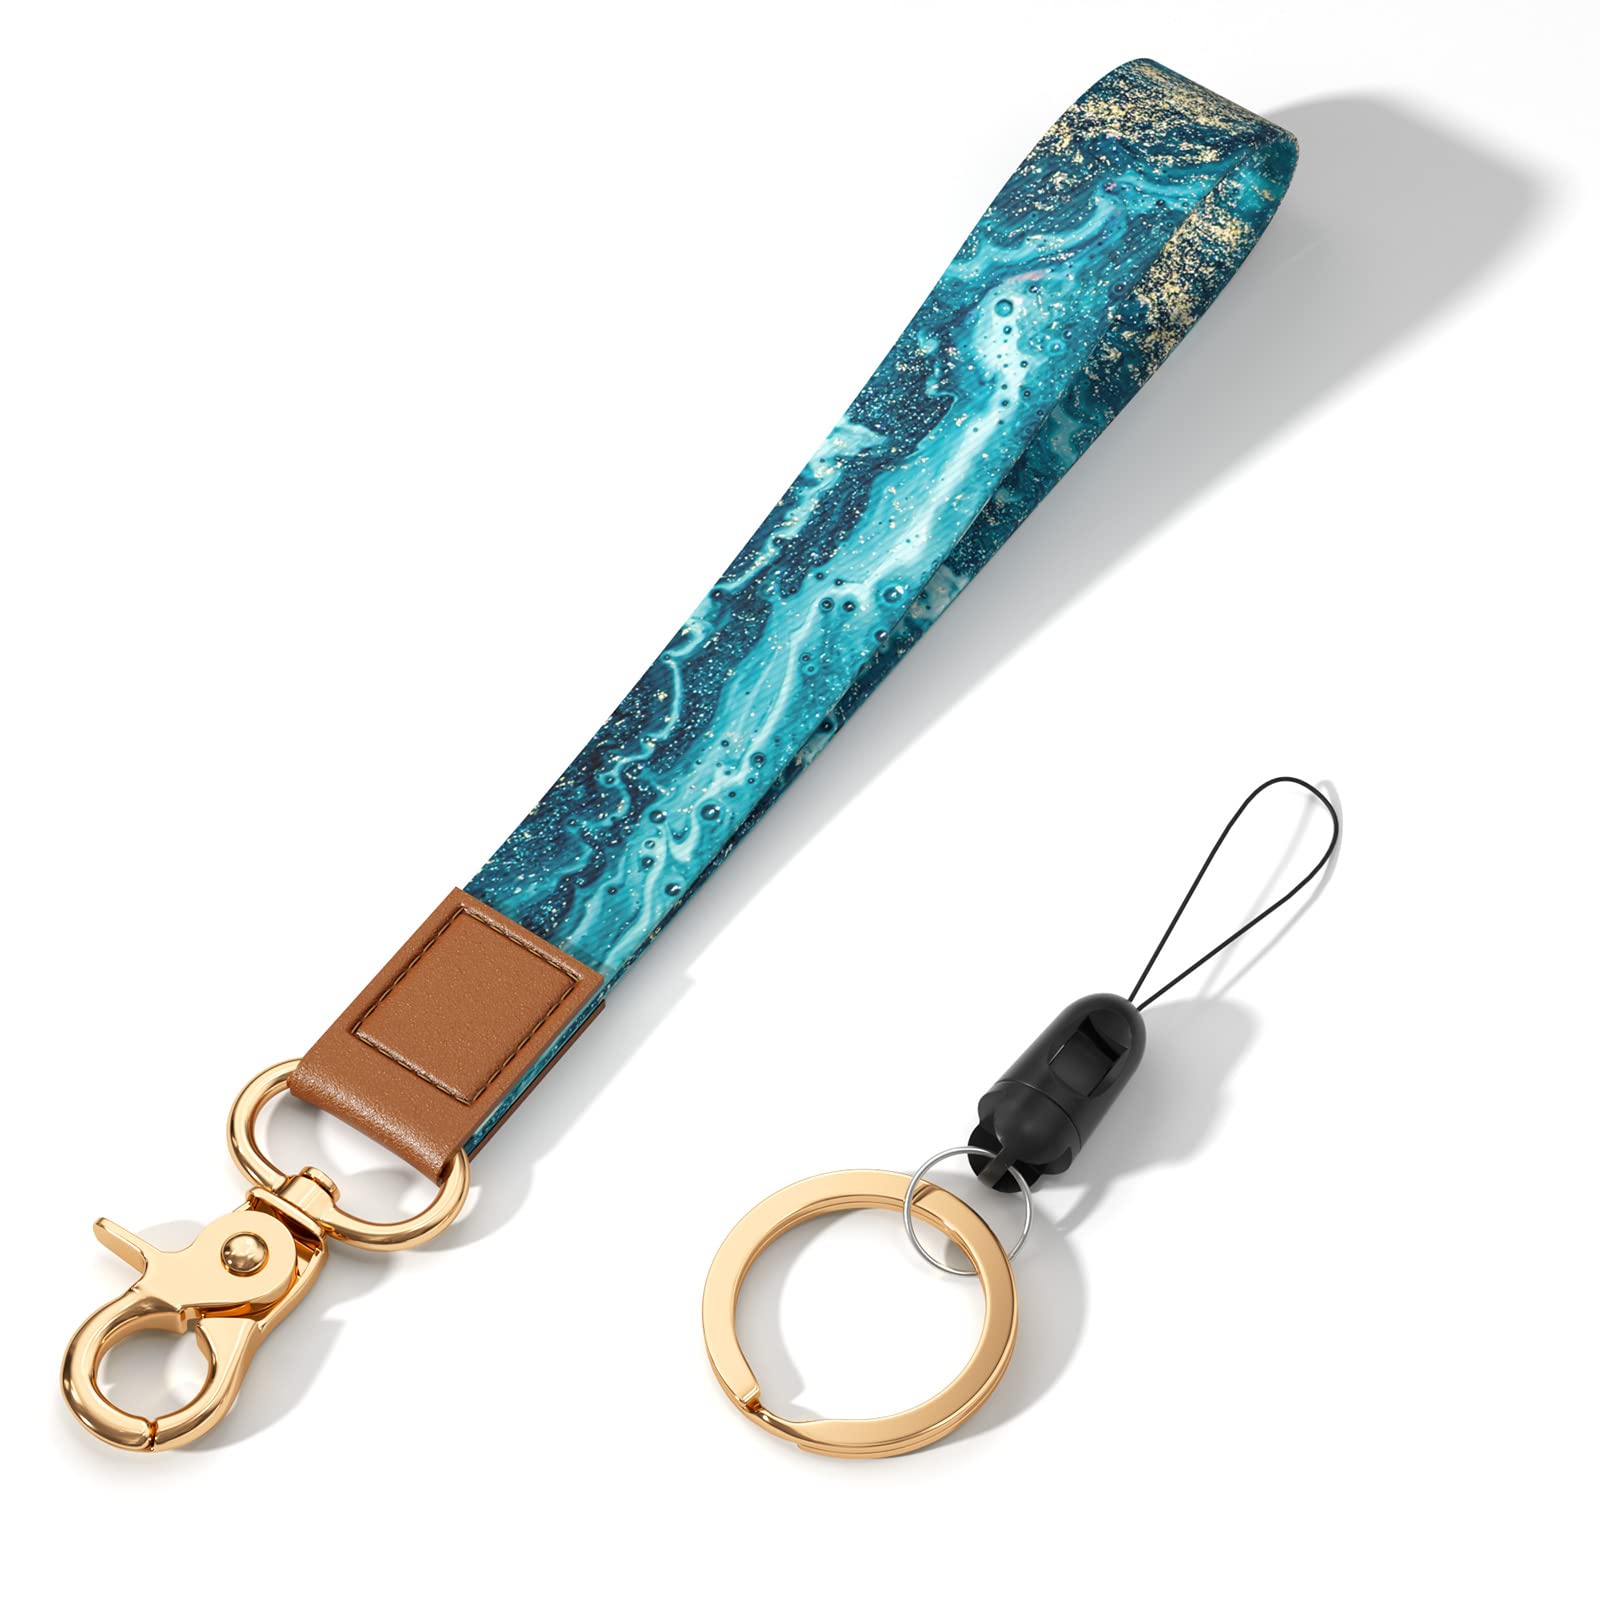 Hsxnam Wrist Lanyard Key Chain, Cute Wristlet Strap Keychain Holder For Women Men Keys Airpods Id Badges Phone, Teal Marble